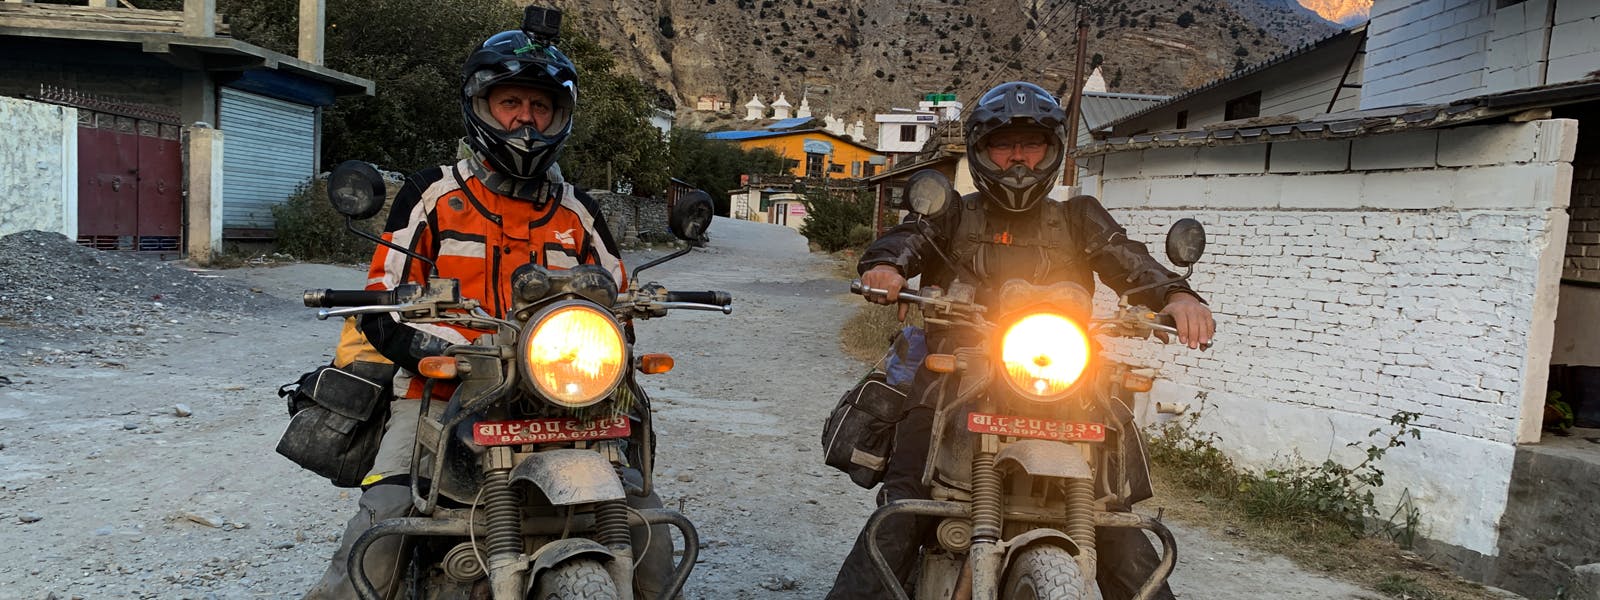 Lower Mustang Muktinath Motorbike Tour - <span class="font-light">9 days</span>